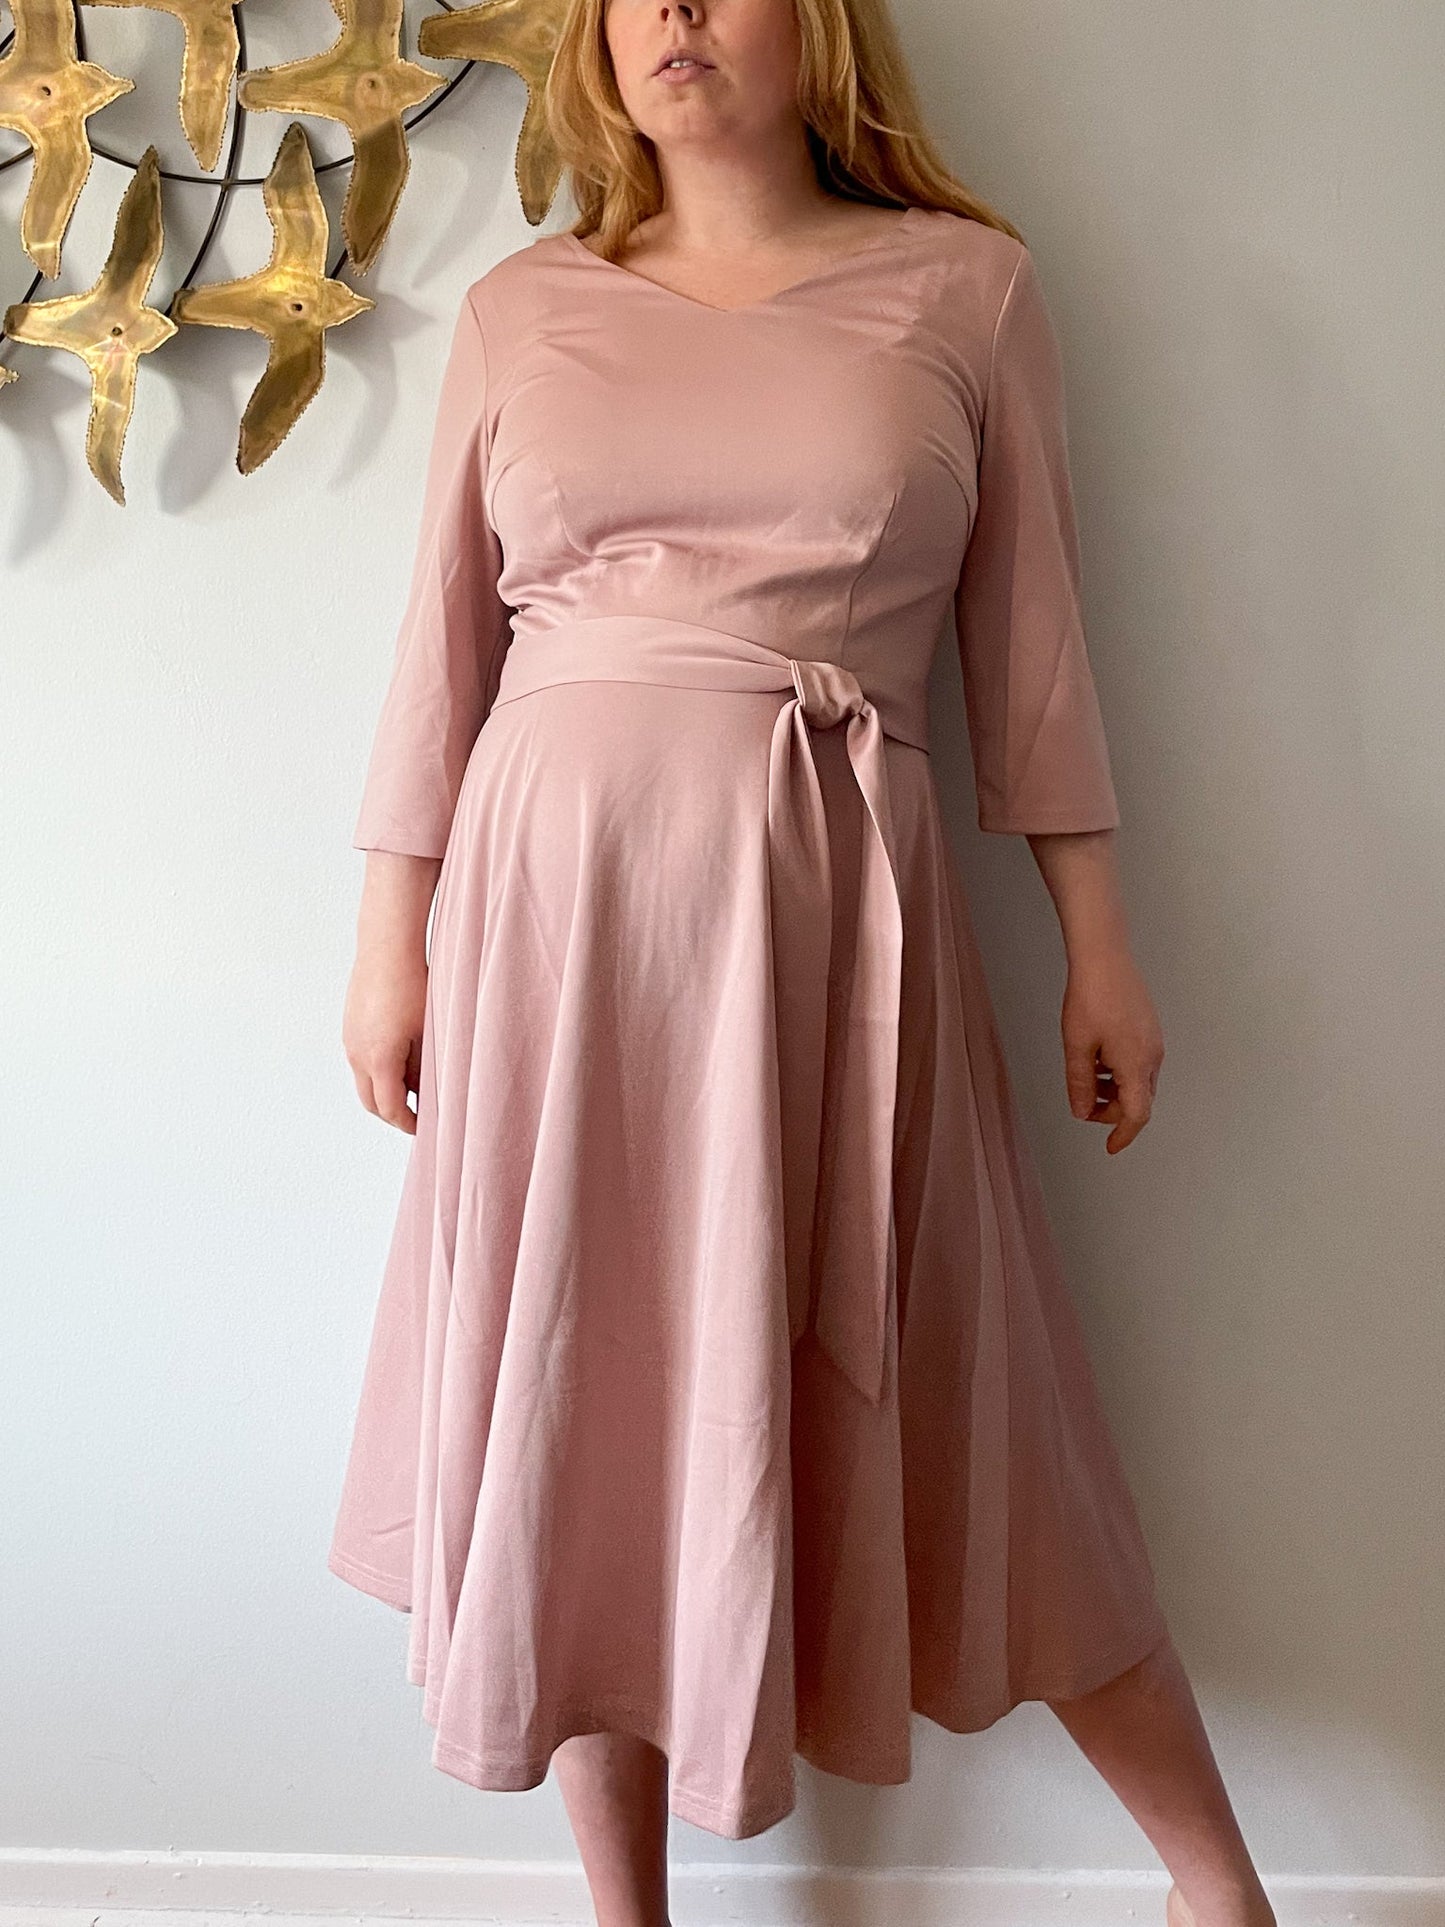 Dressystar Blush Pink Fit Flare 3/4 Sleeve Gown Dress NWT - 2XL